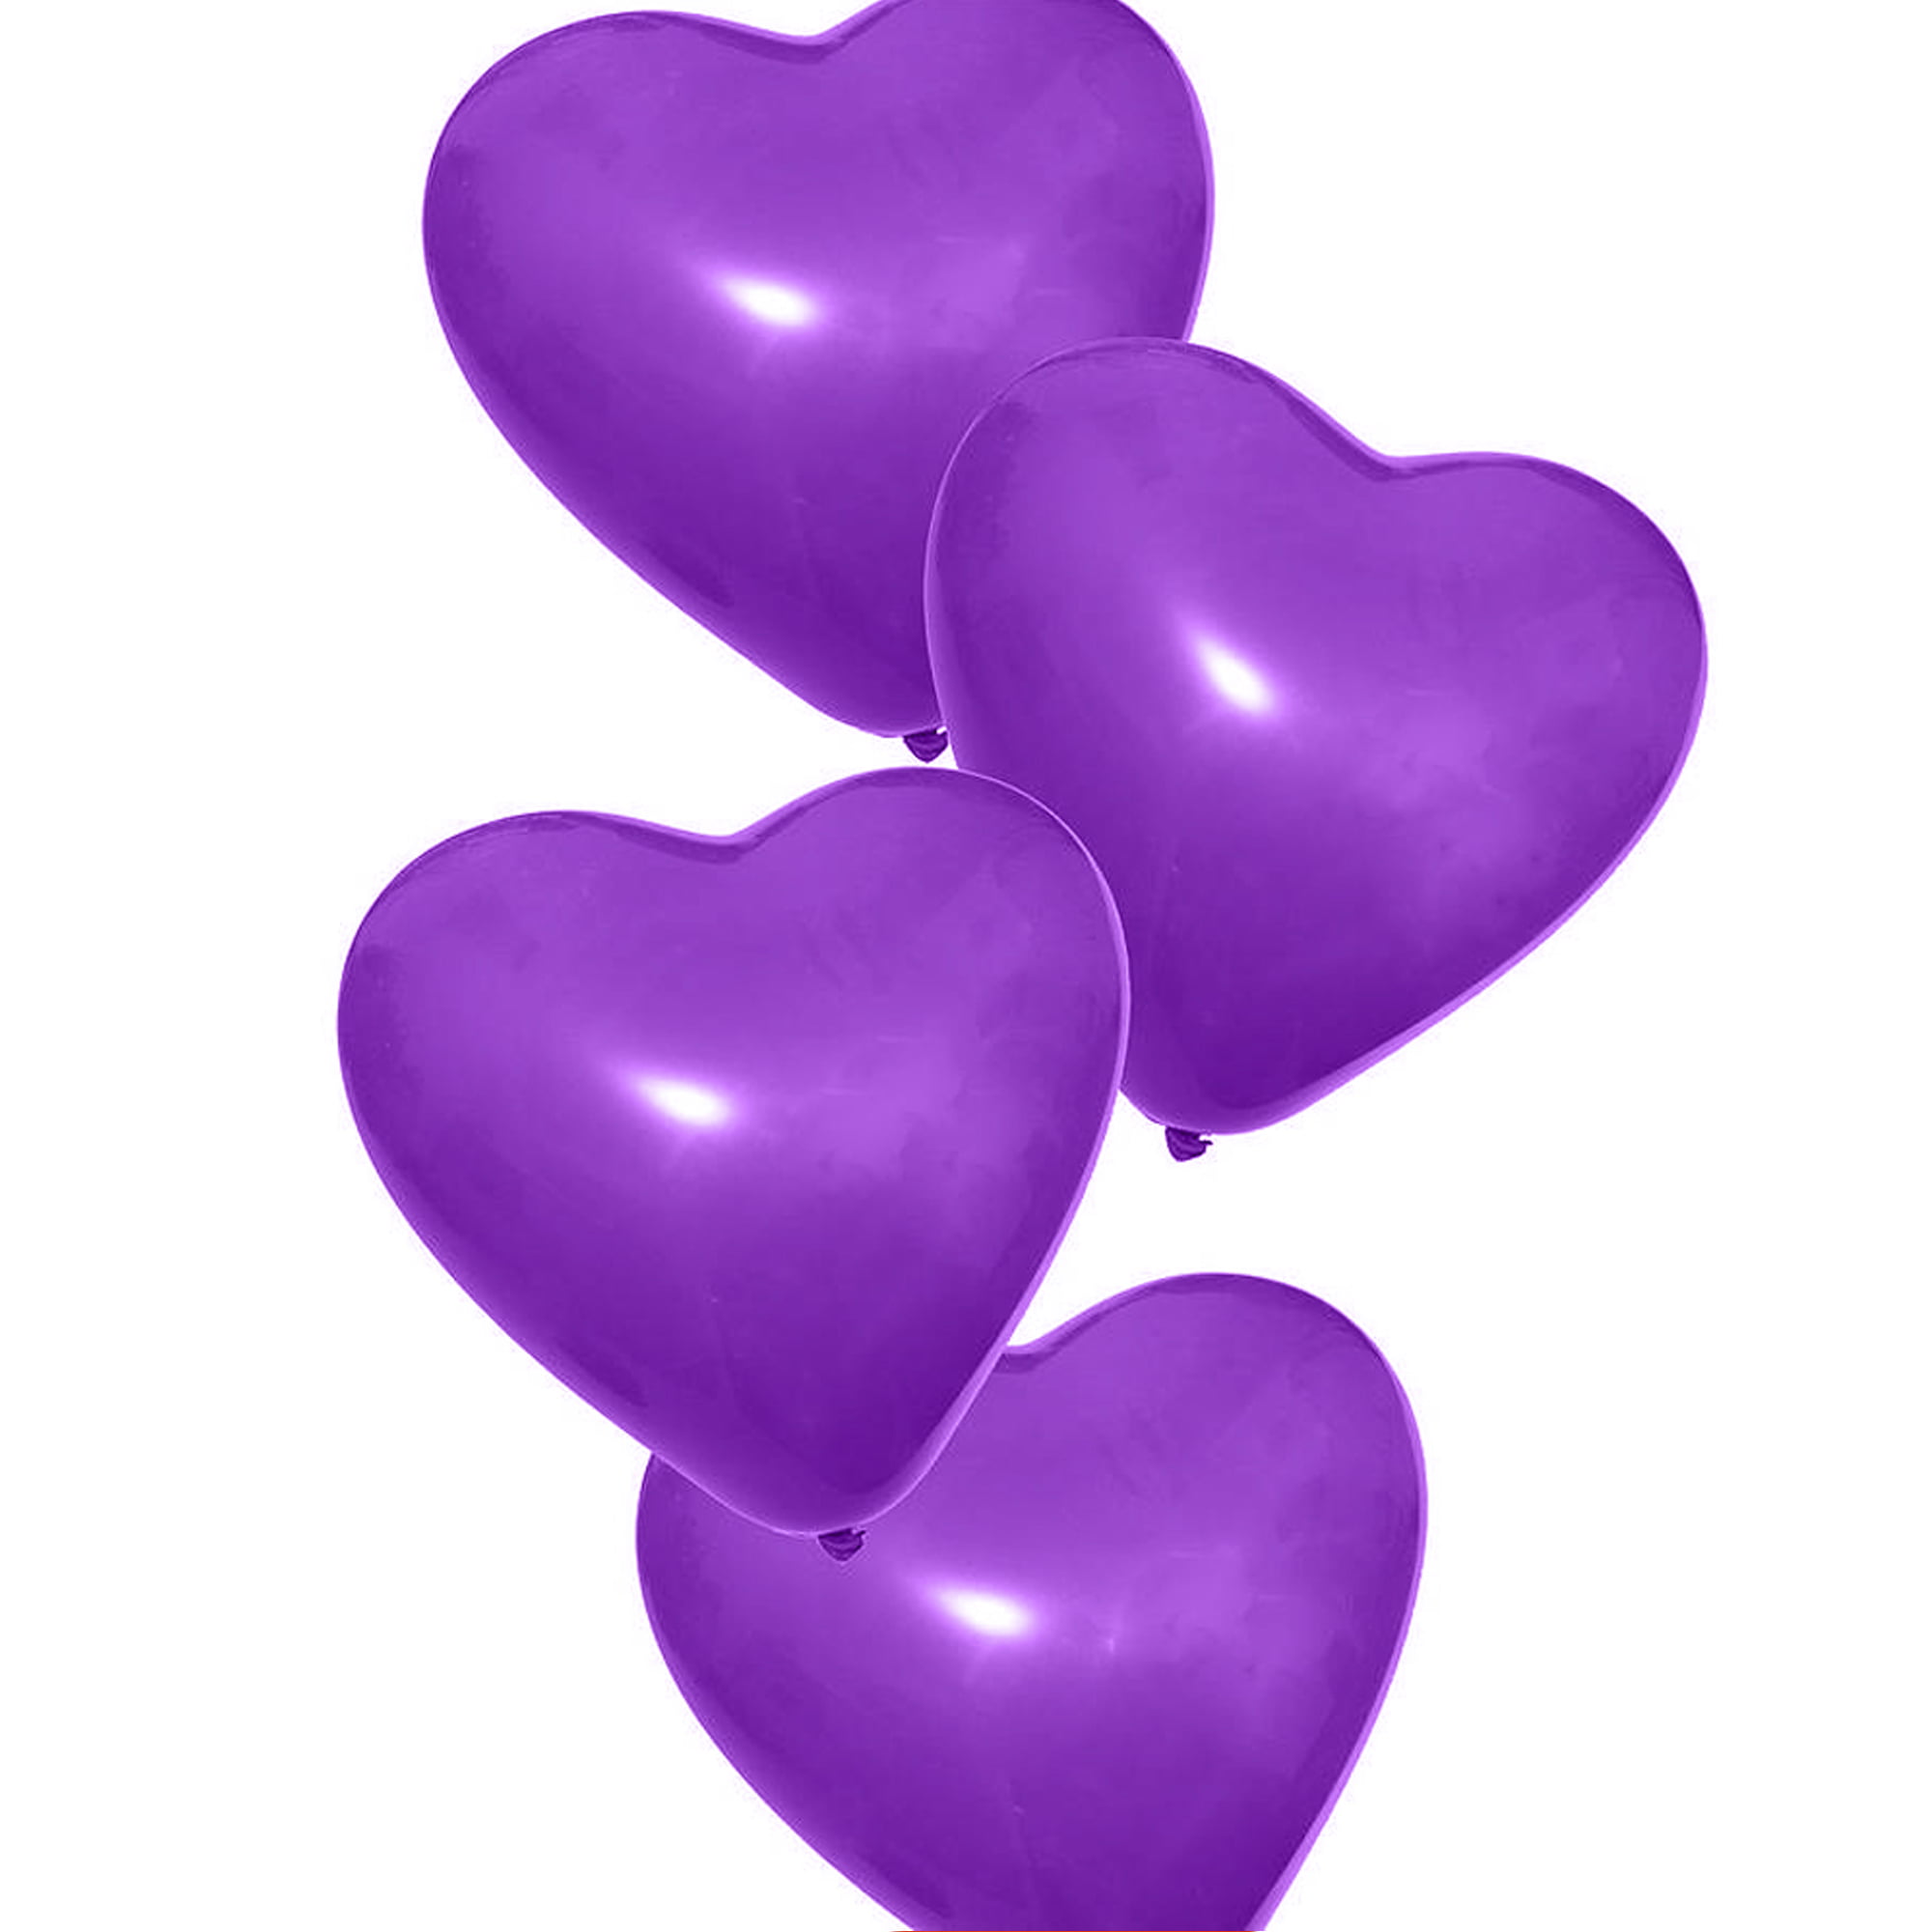 100 x Heart Balloons Birthday Party, Kids Party, Heart Shape Balloons